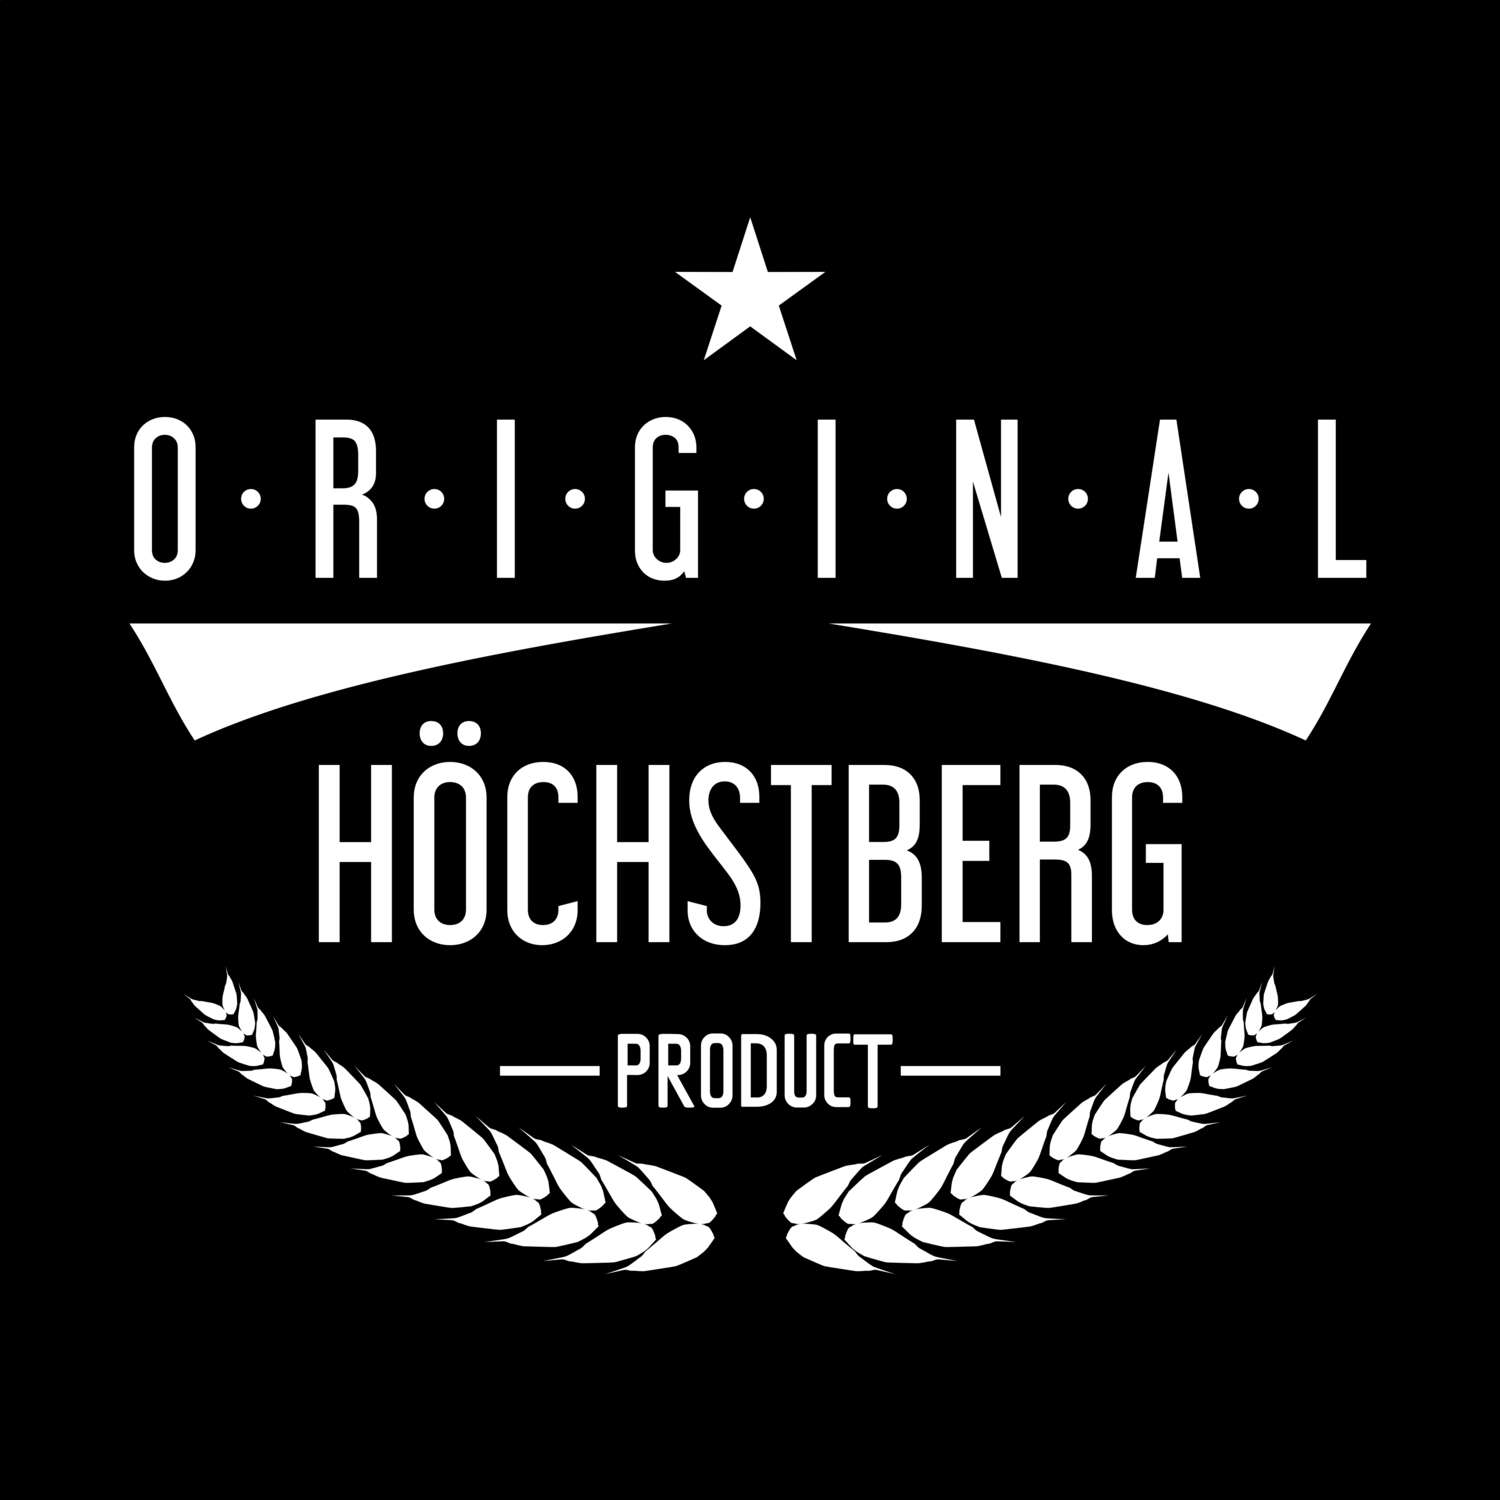 Höchstberg T-Shirt »Original Product«